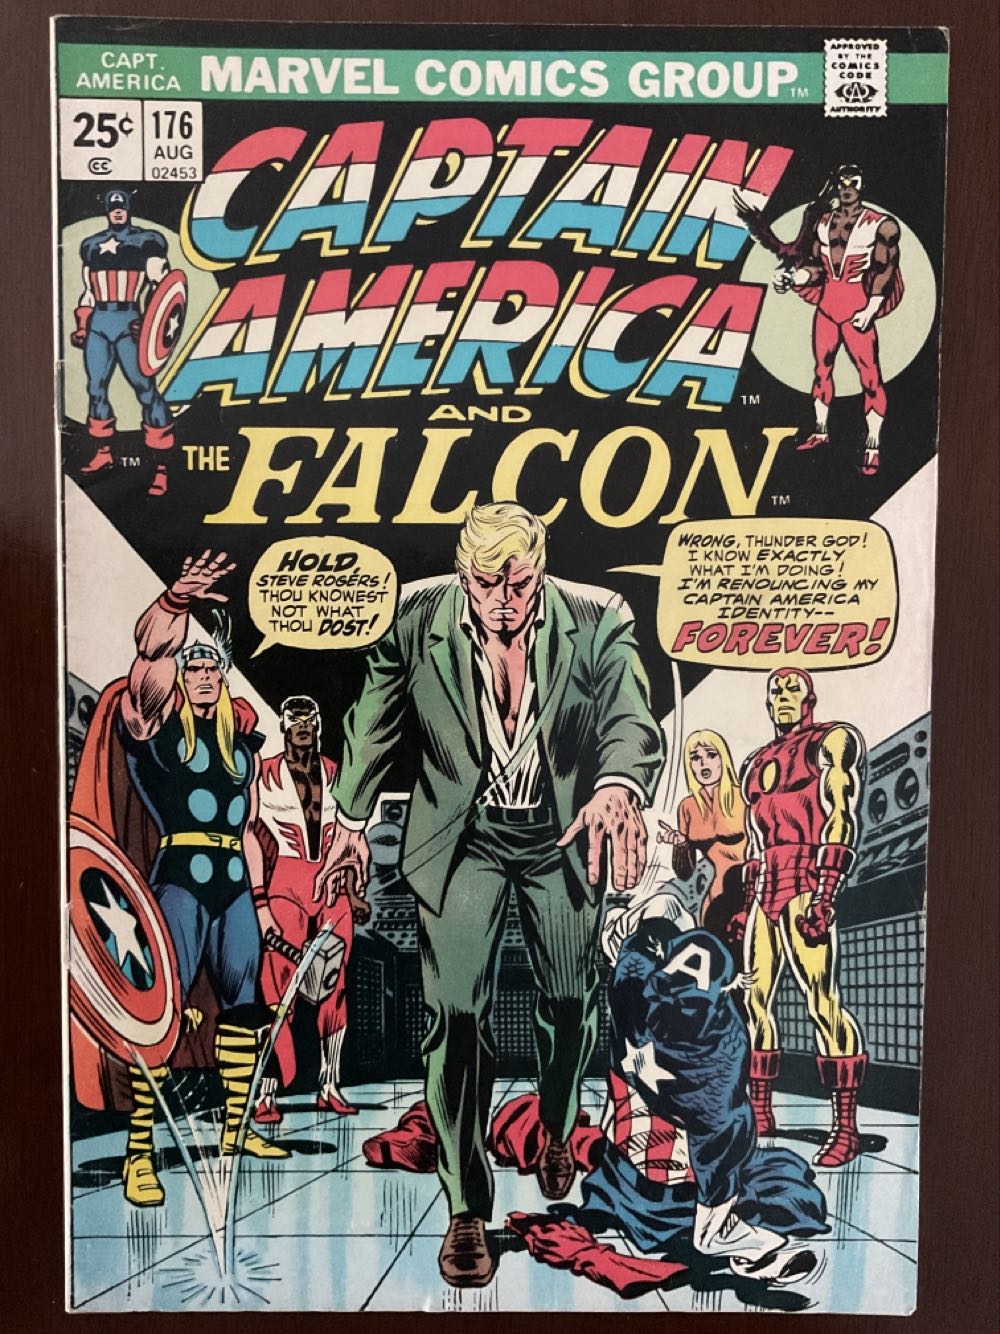 Captain America - Marvel Comics (176 - Aug 1974) comic book collectible [Barcode 9780785117261] - Main Image 2